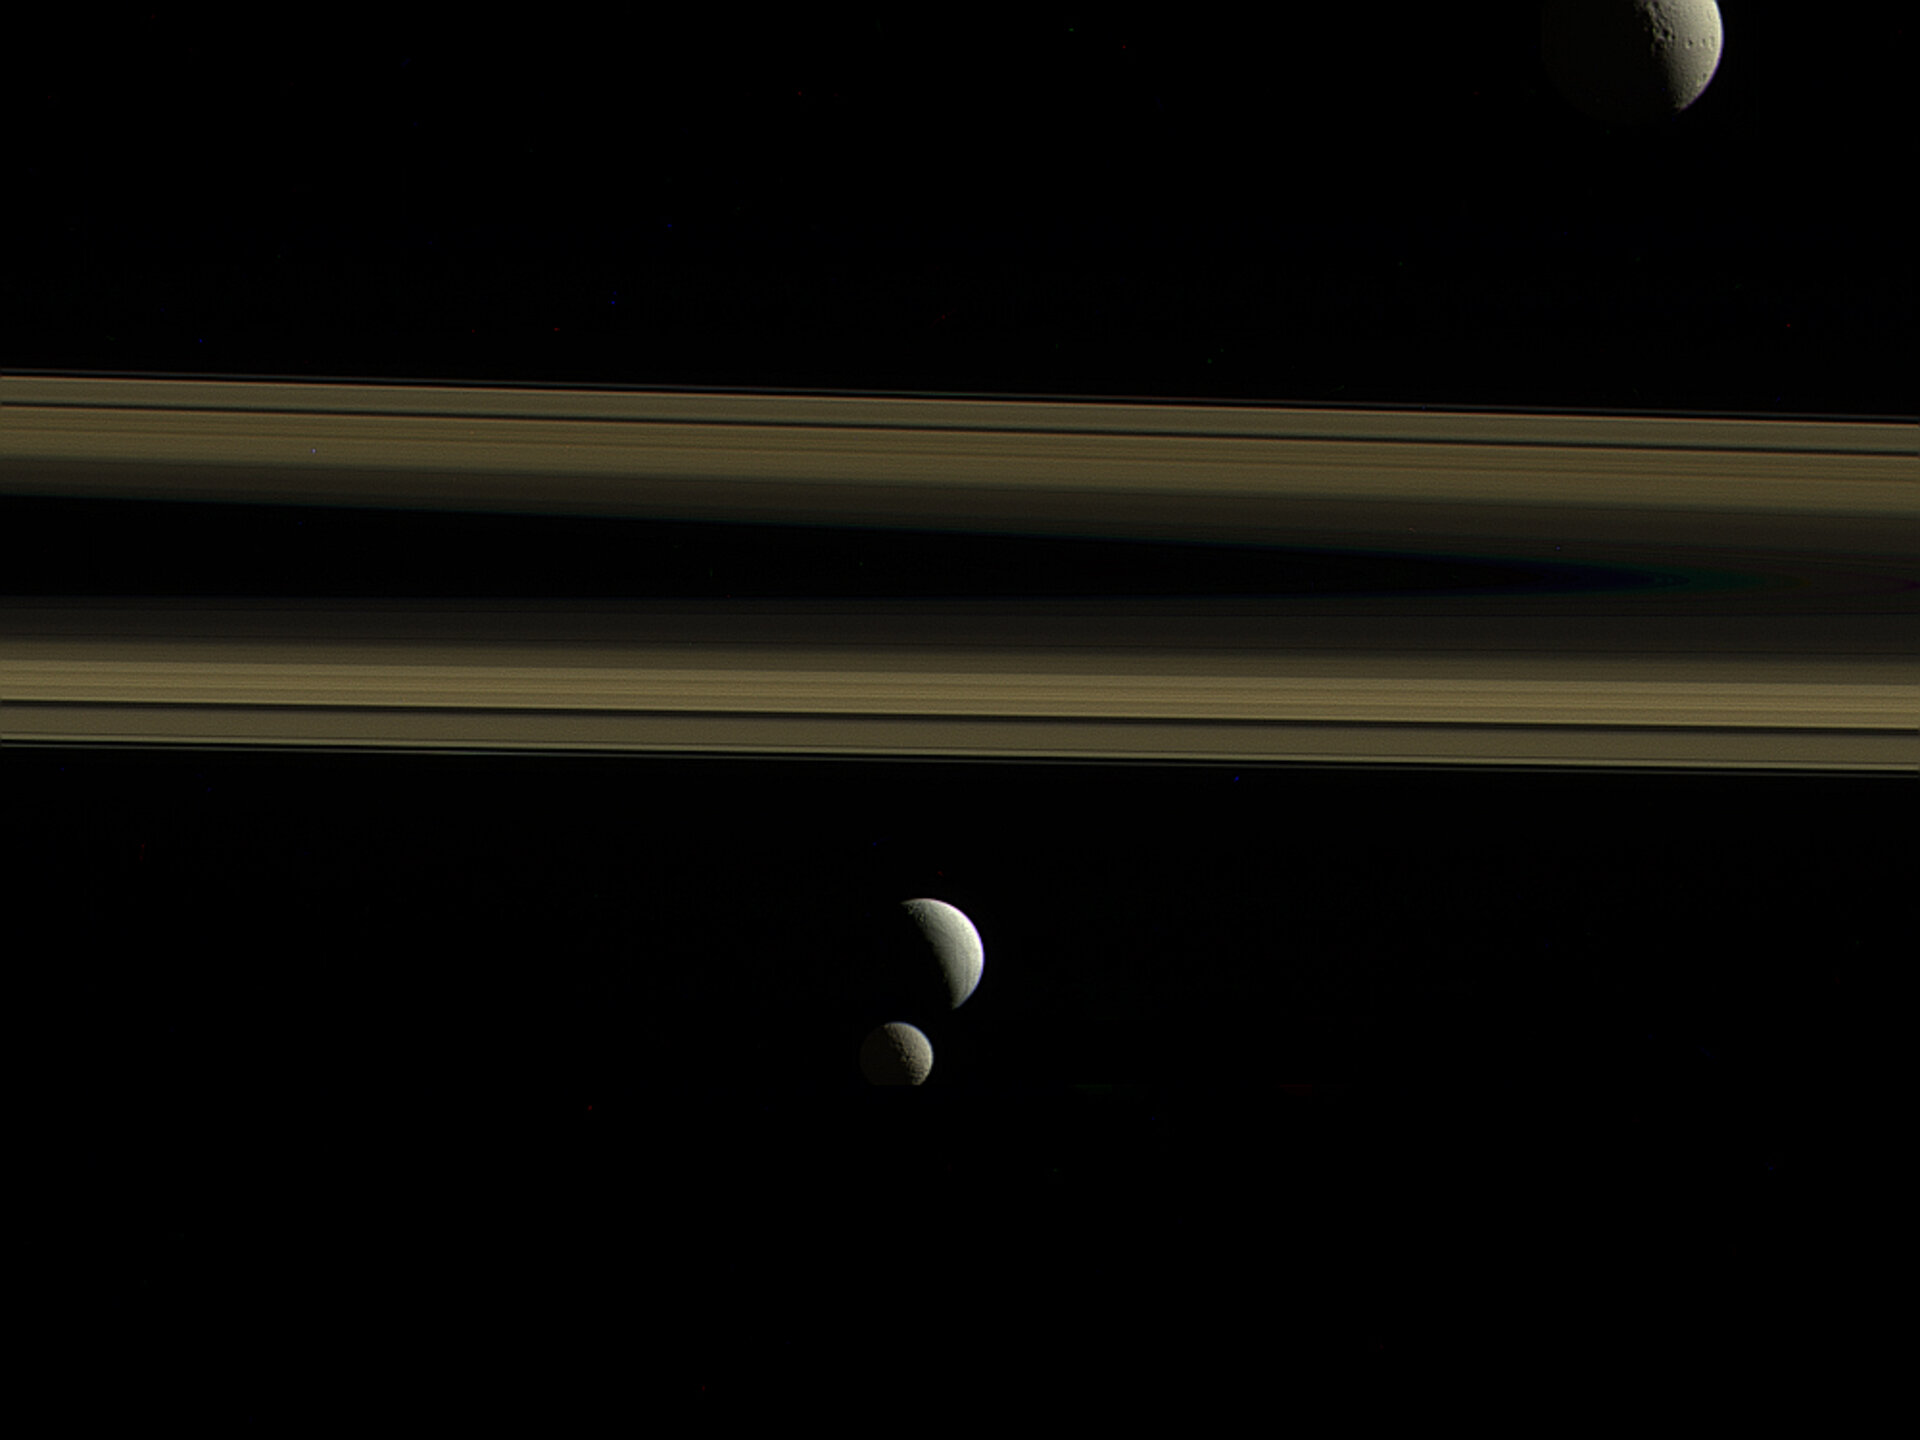 Tethys, Enceladus, Mimas and Saturn's rings.